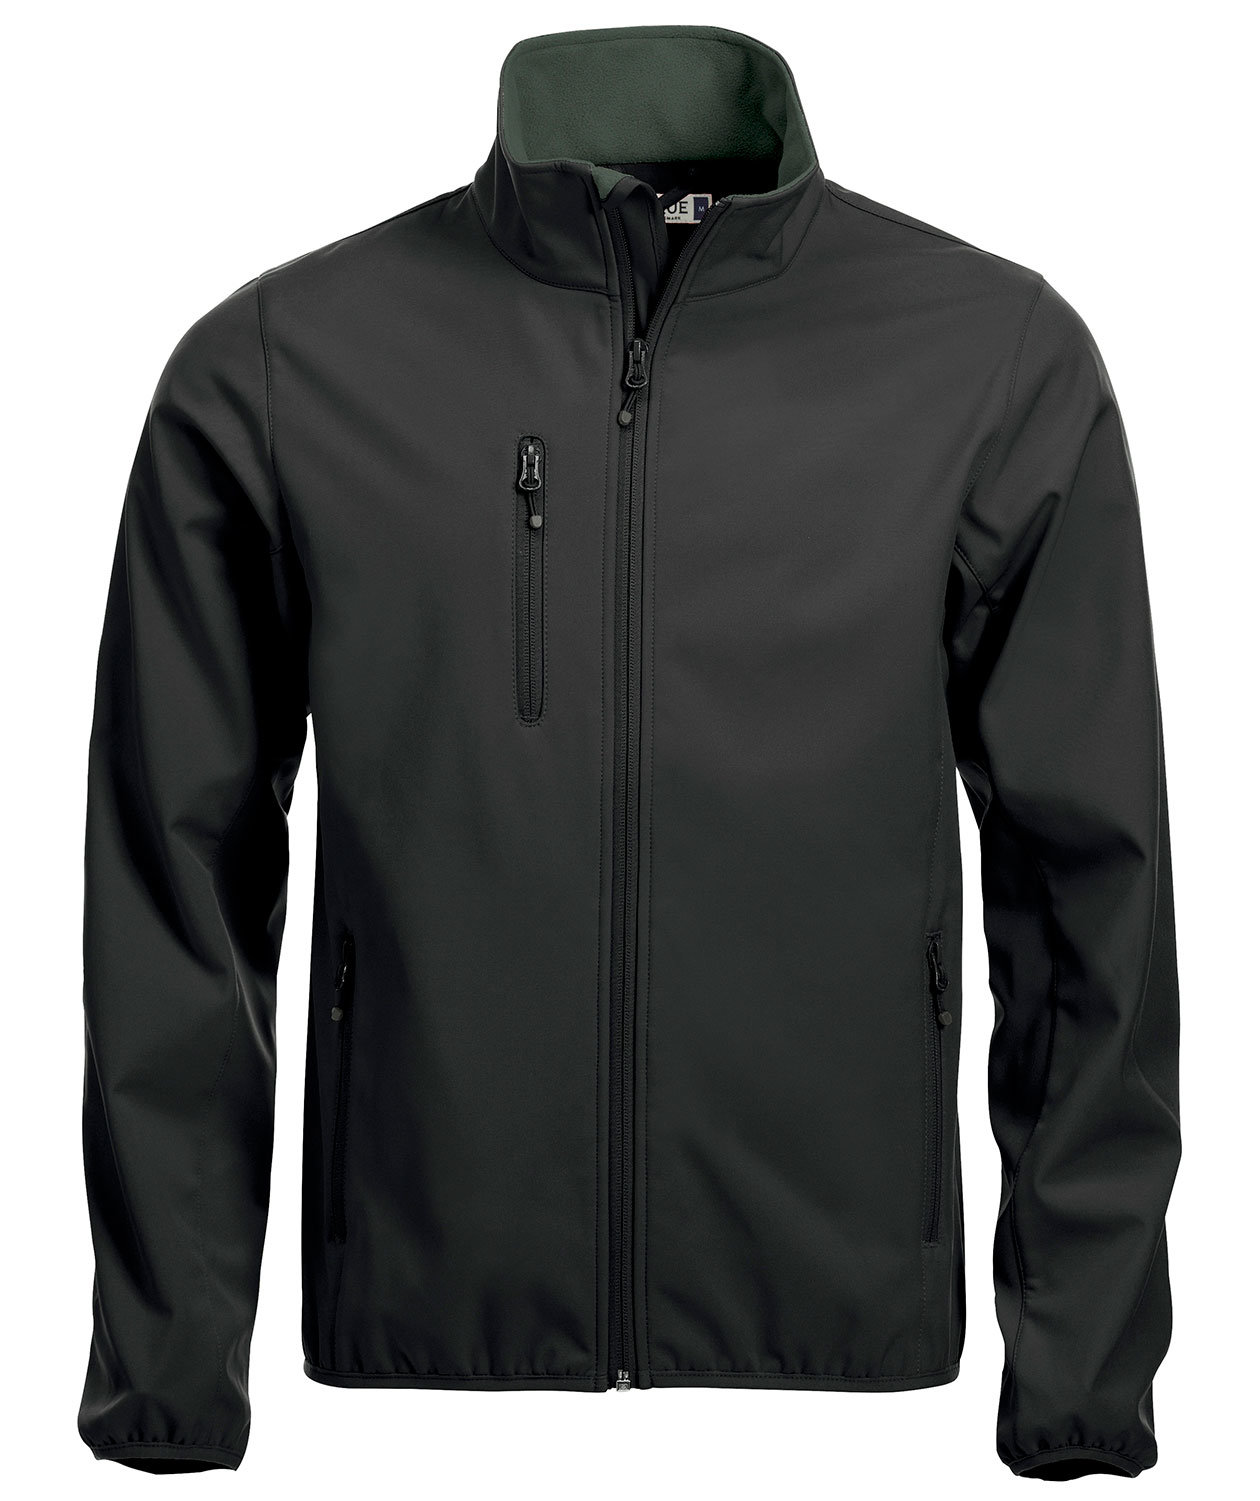 Buy Clique Basic softshell jacket at Cheap-workwear.com